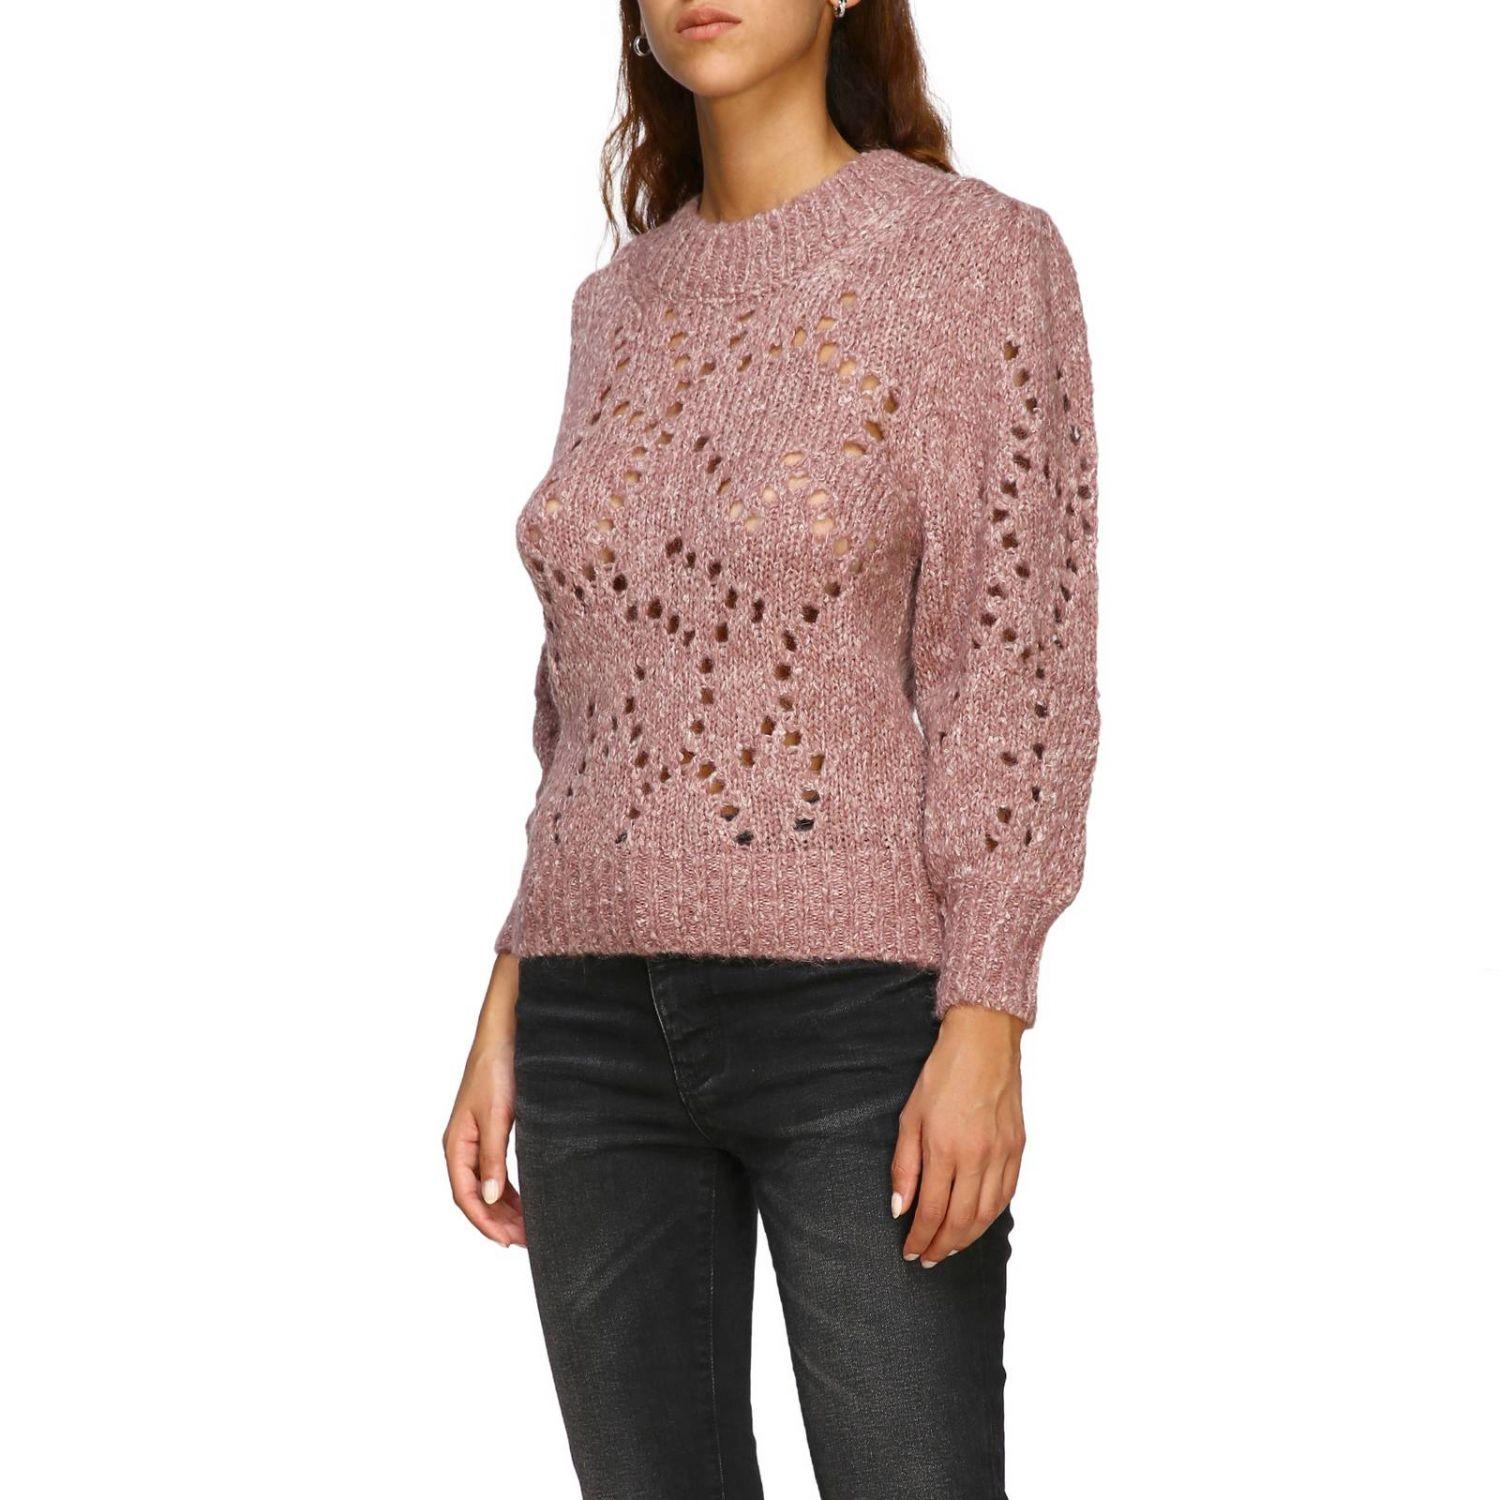 Isabel Marant Women's Sweater in Pink - Lyst